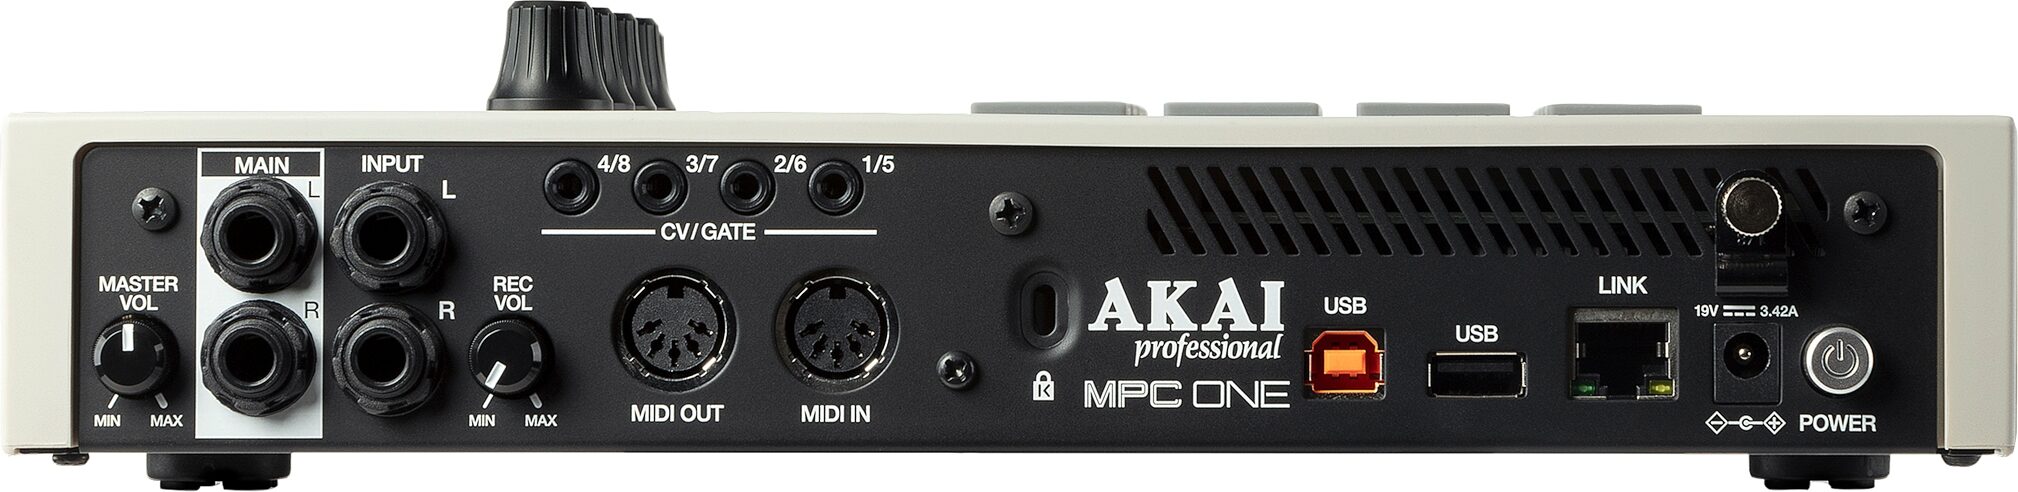 Akai Limited Edition MPC One Retro Edition Music Workstation